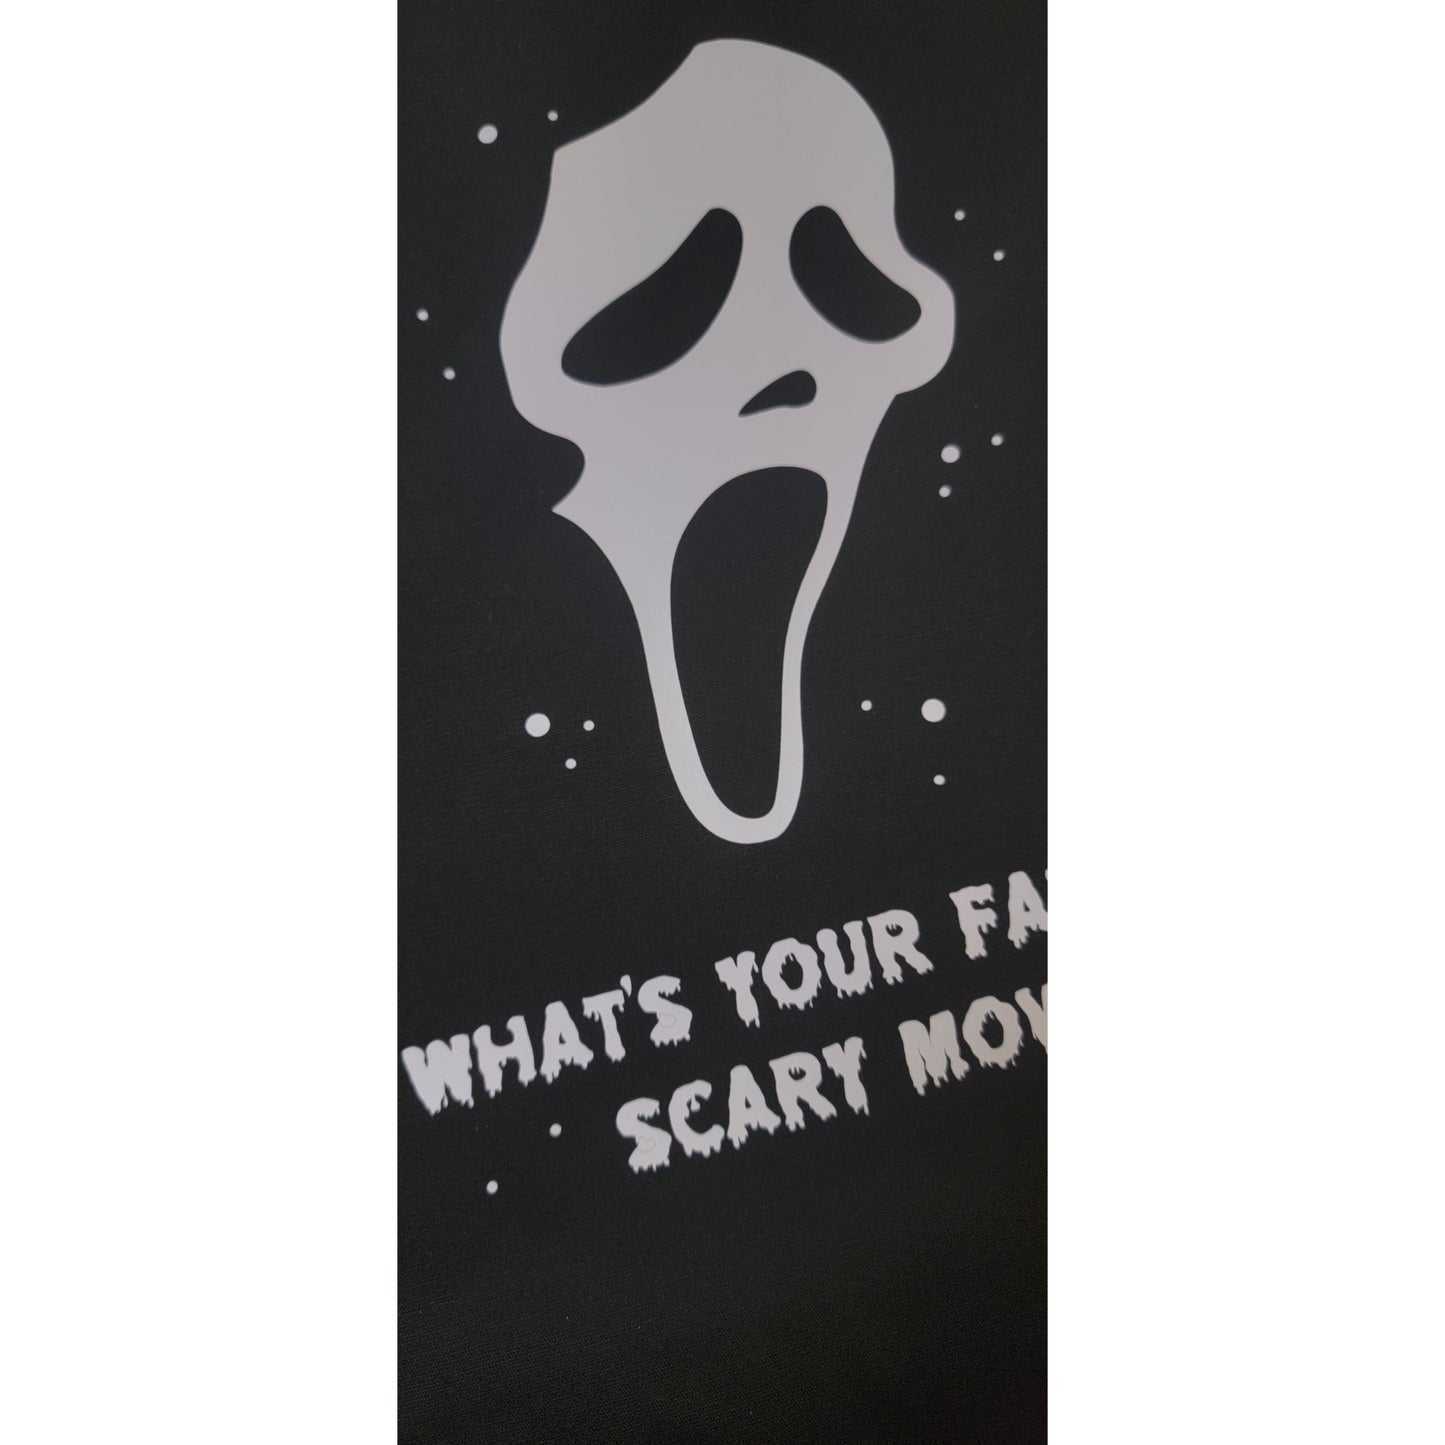 ghostface bag|zombicides.com/